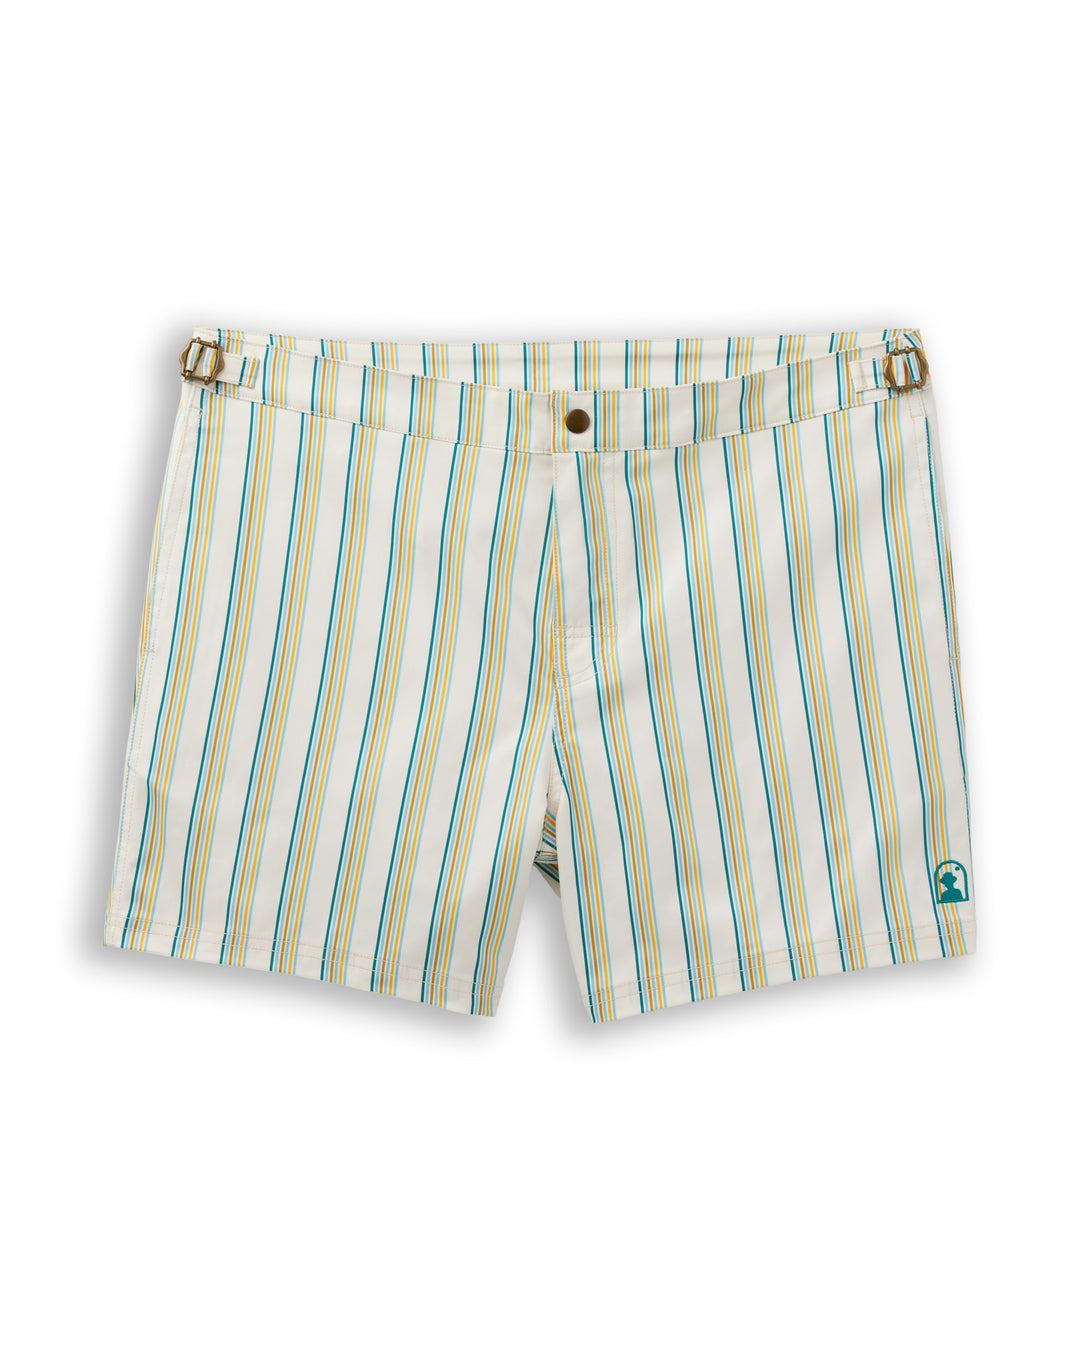 A white and blue striped Dandy Del Mar Mallorca Swim-Walk Short - Vintage Ivory Cay Stripe with single layer nylon construction.